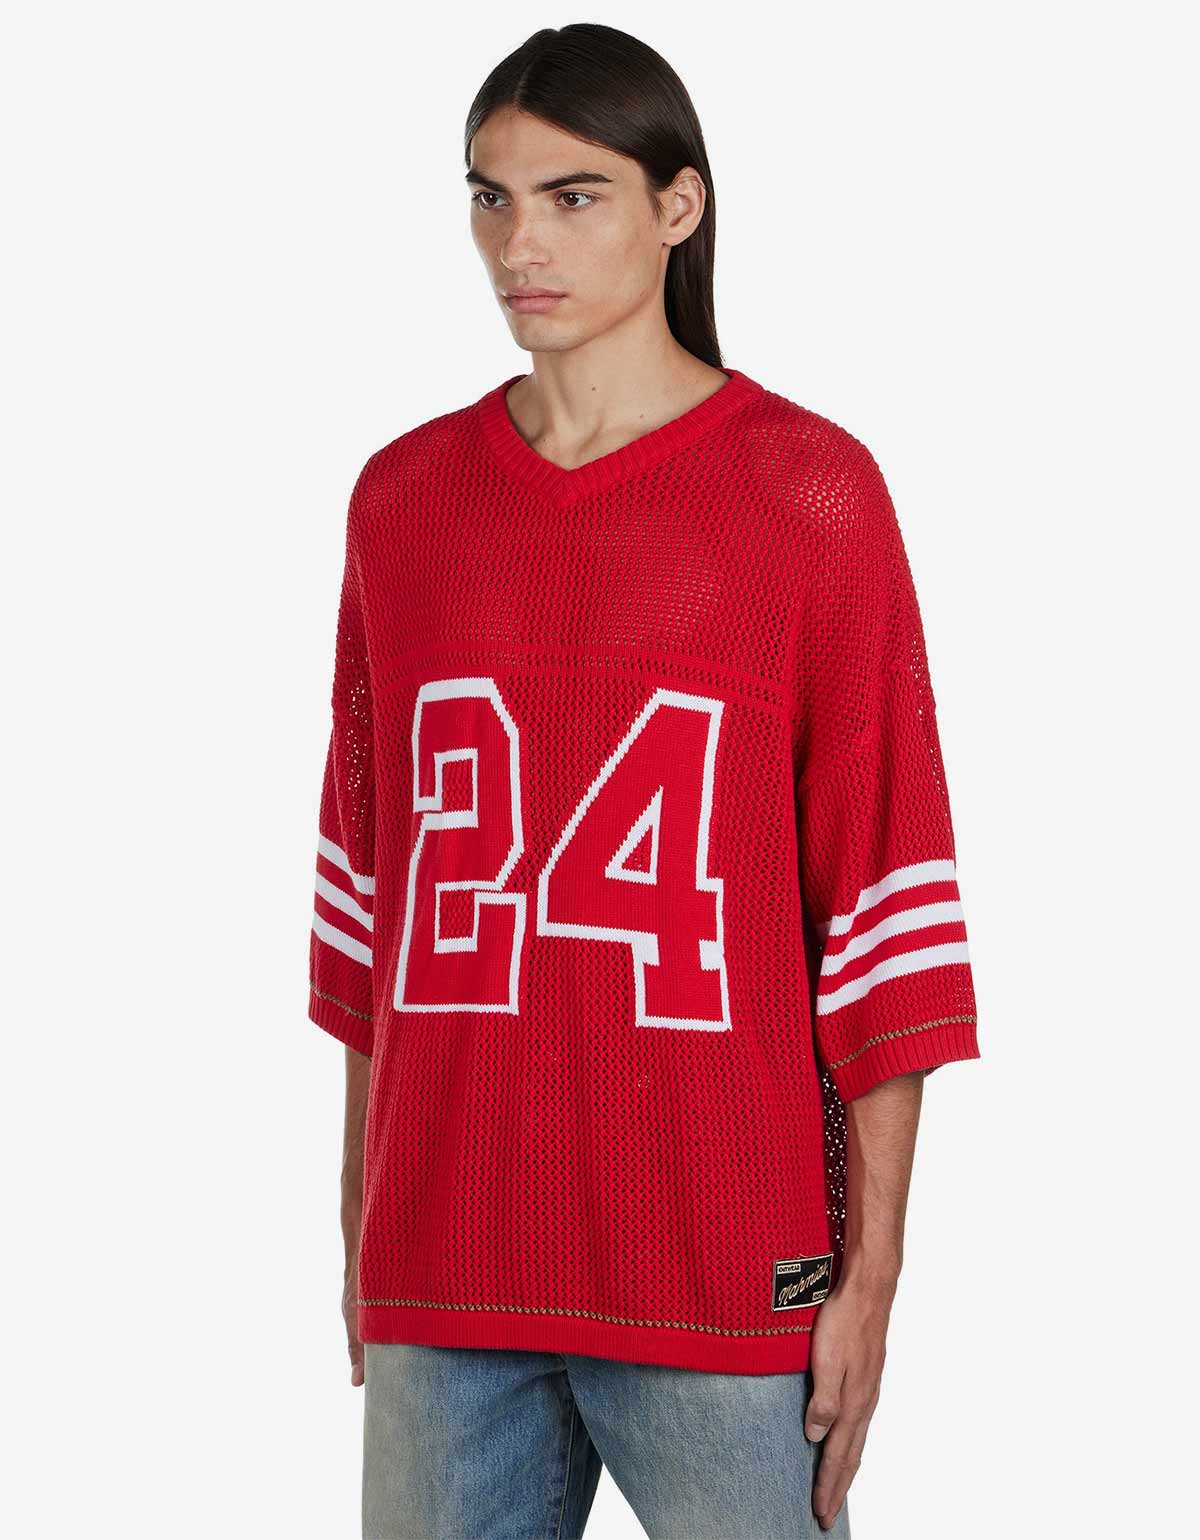 Nahmias Red Knit 24 Football Shirt